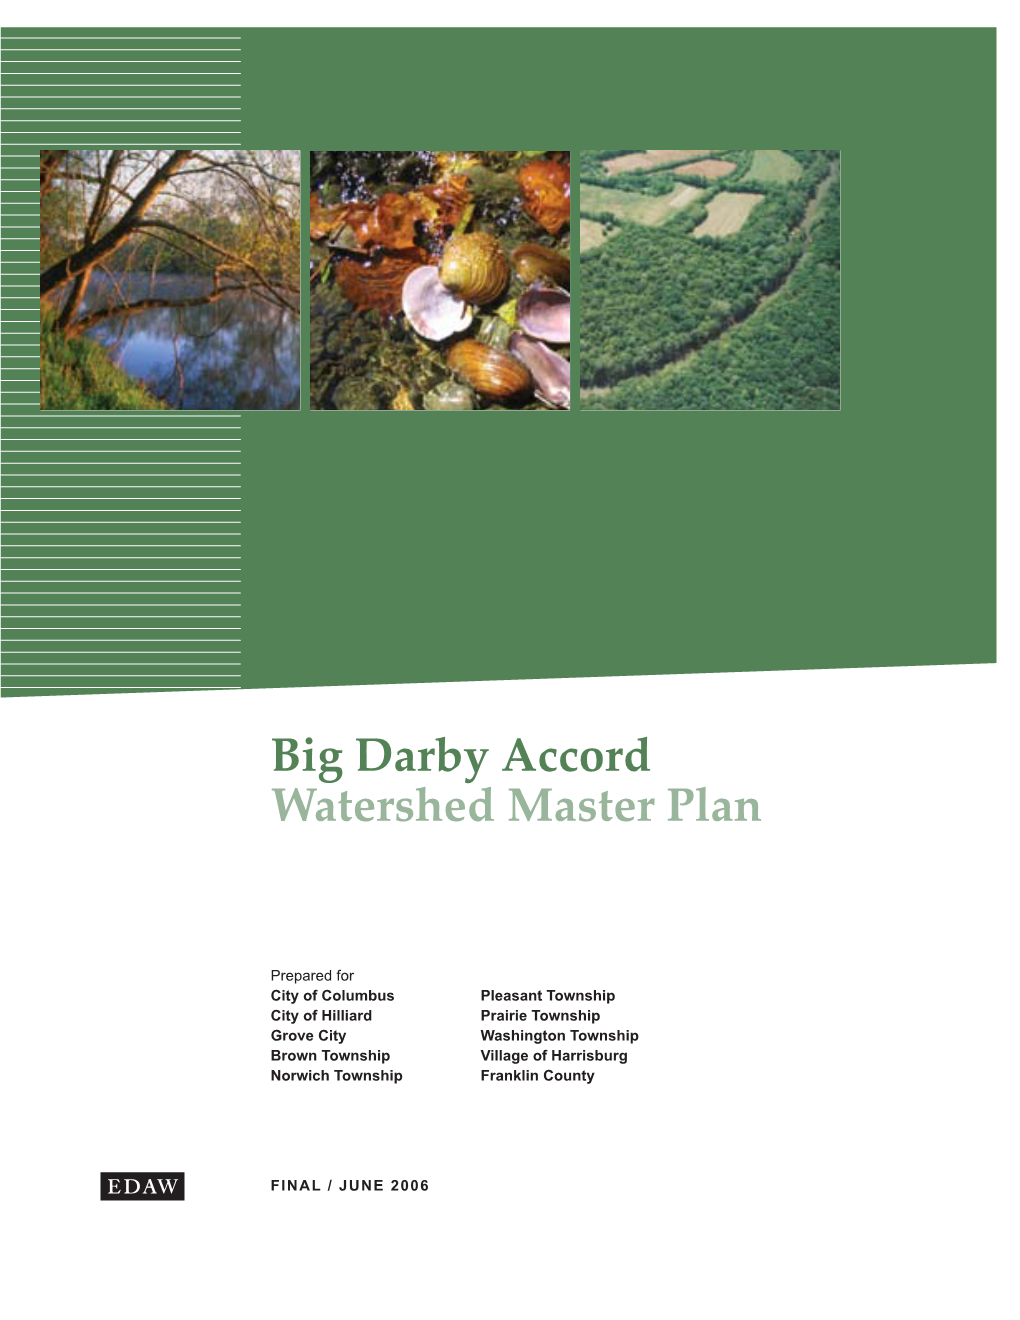 Big Darby Accord Watershed Master Plan